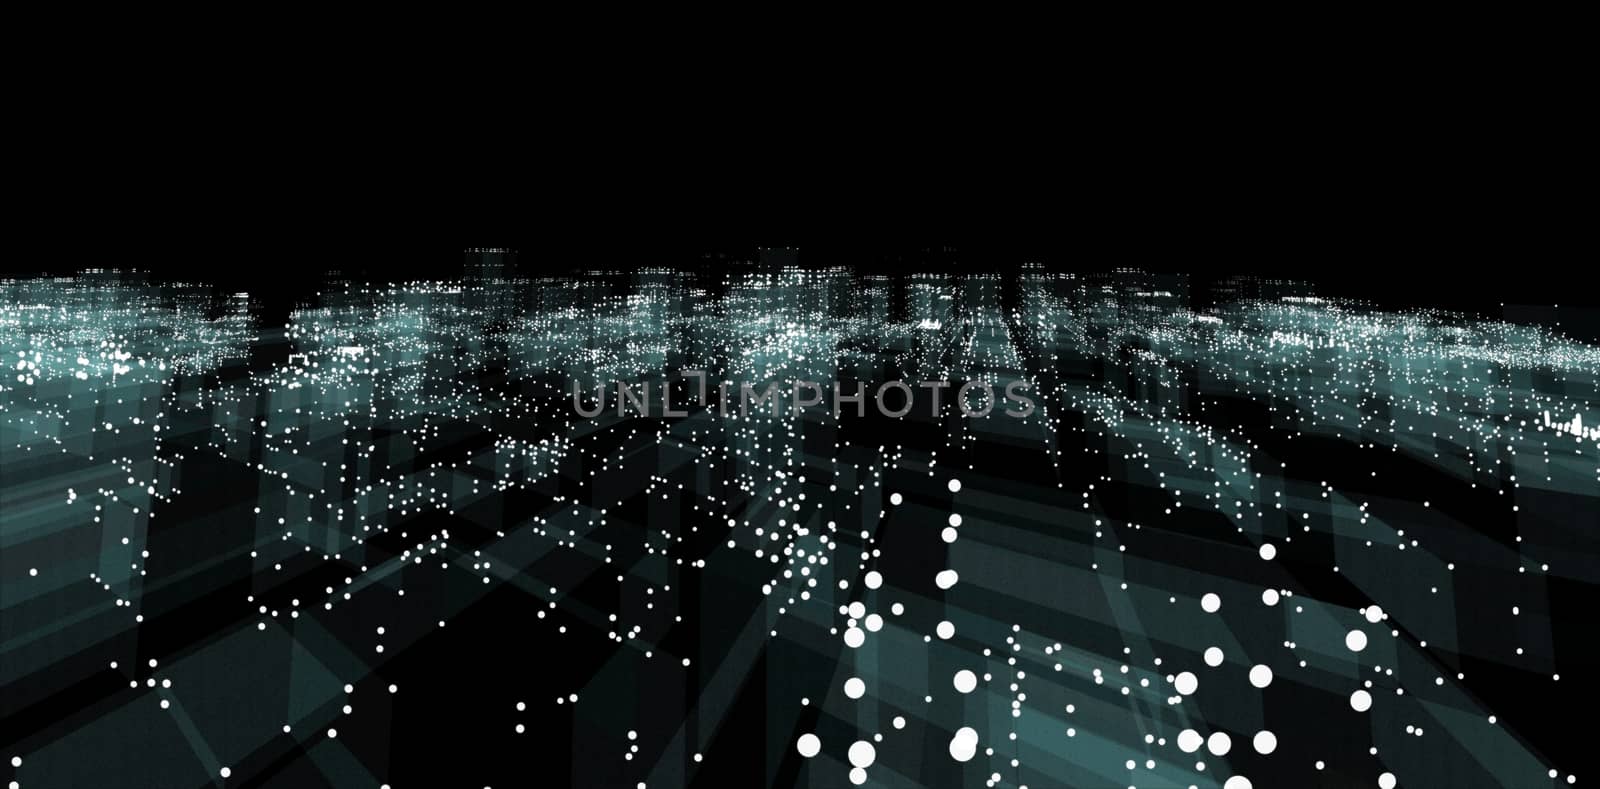 Hologram futuristic interface city by cherezoff